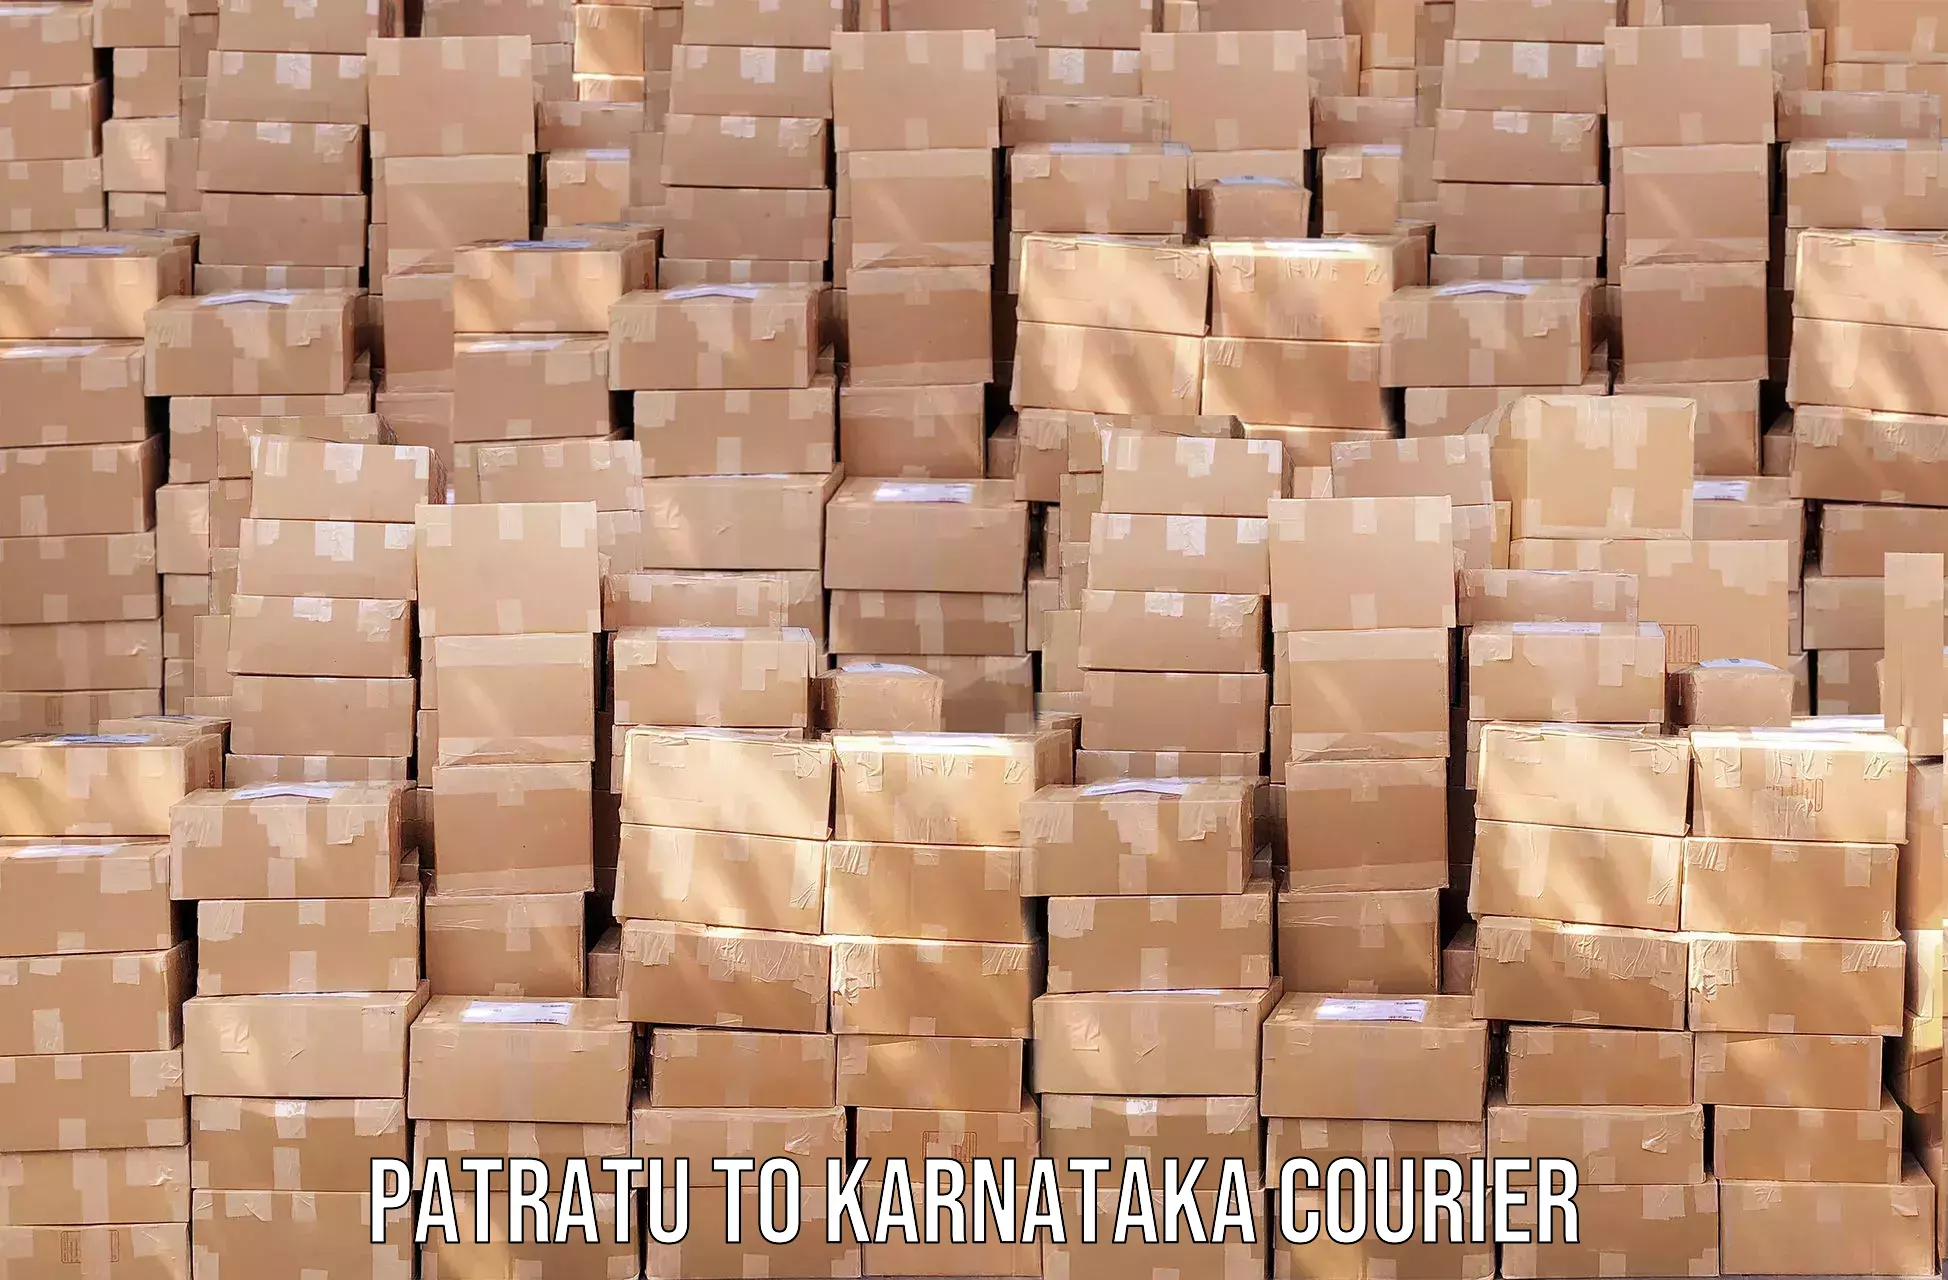 High-performance logistics Patratu to Karnataka